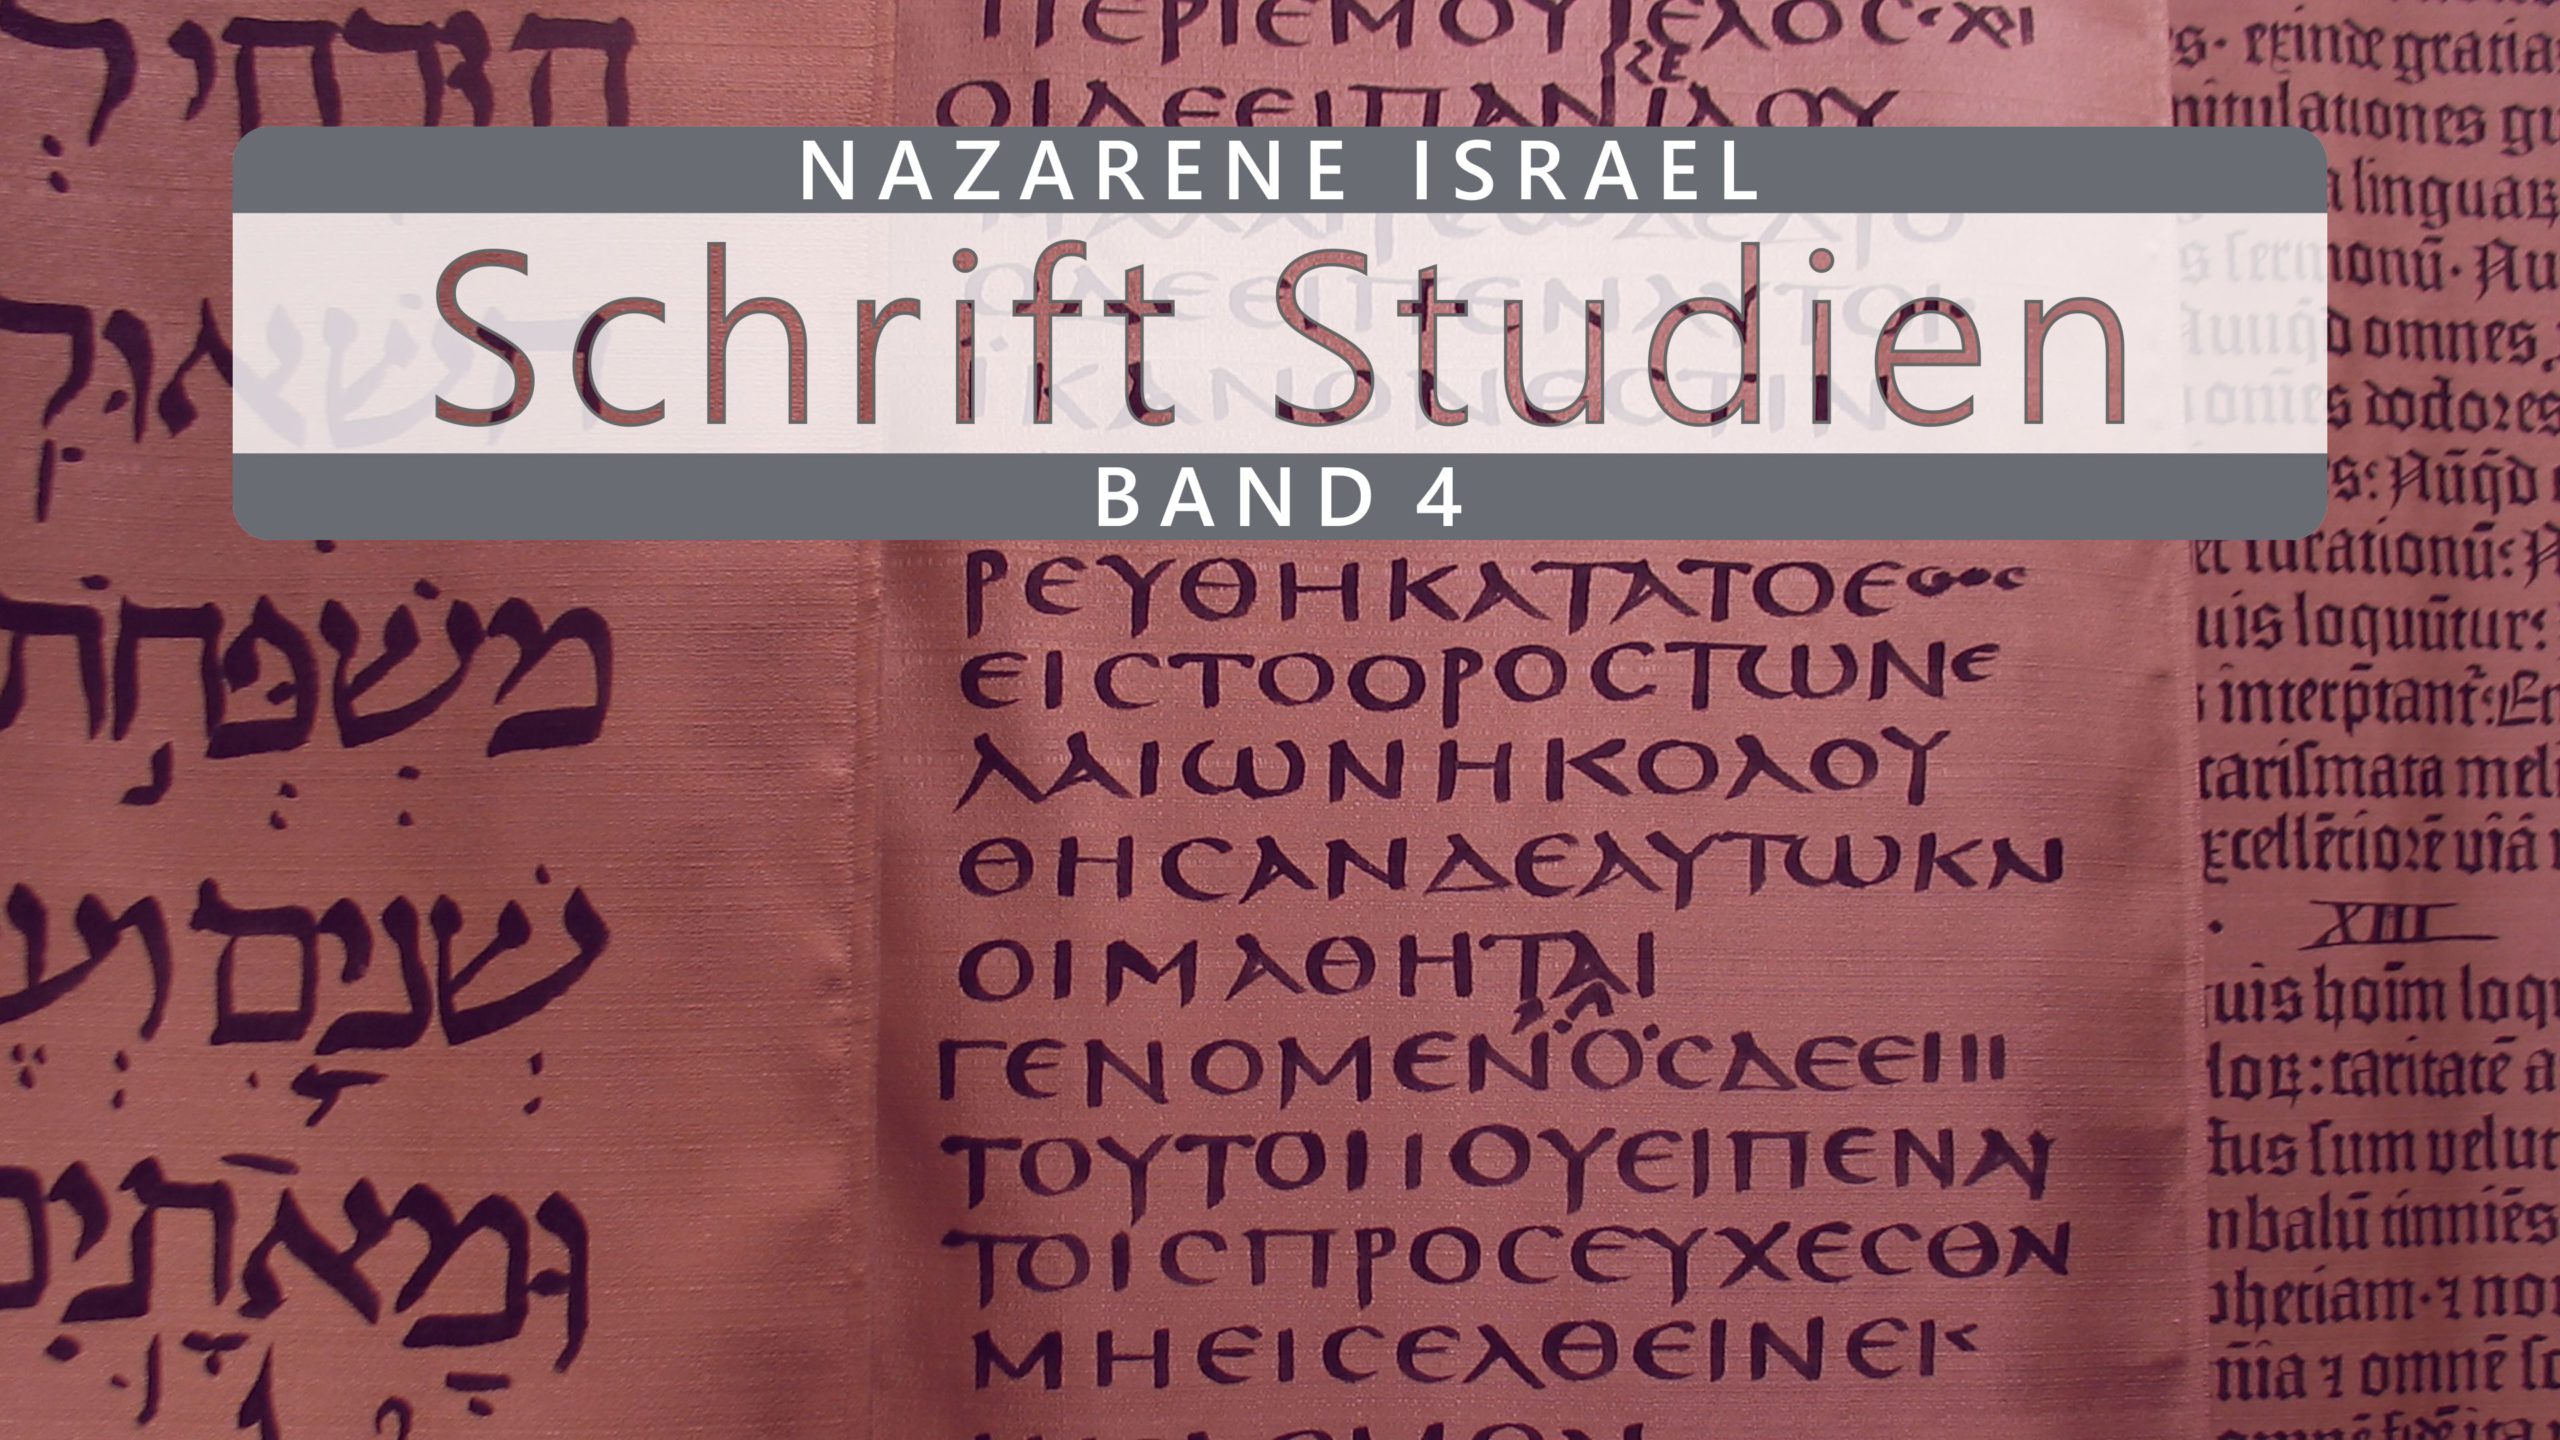 Nazarene Schrift Studien Band 4